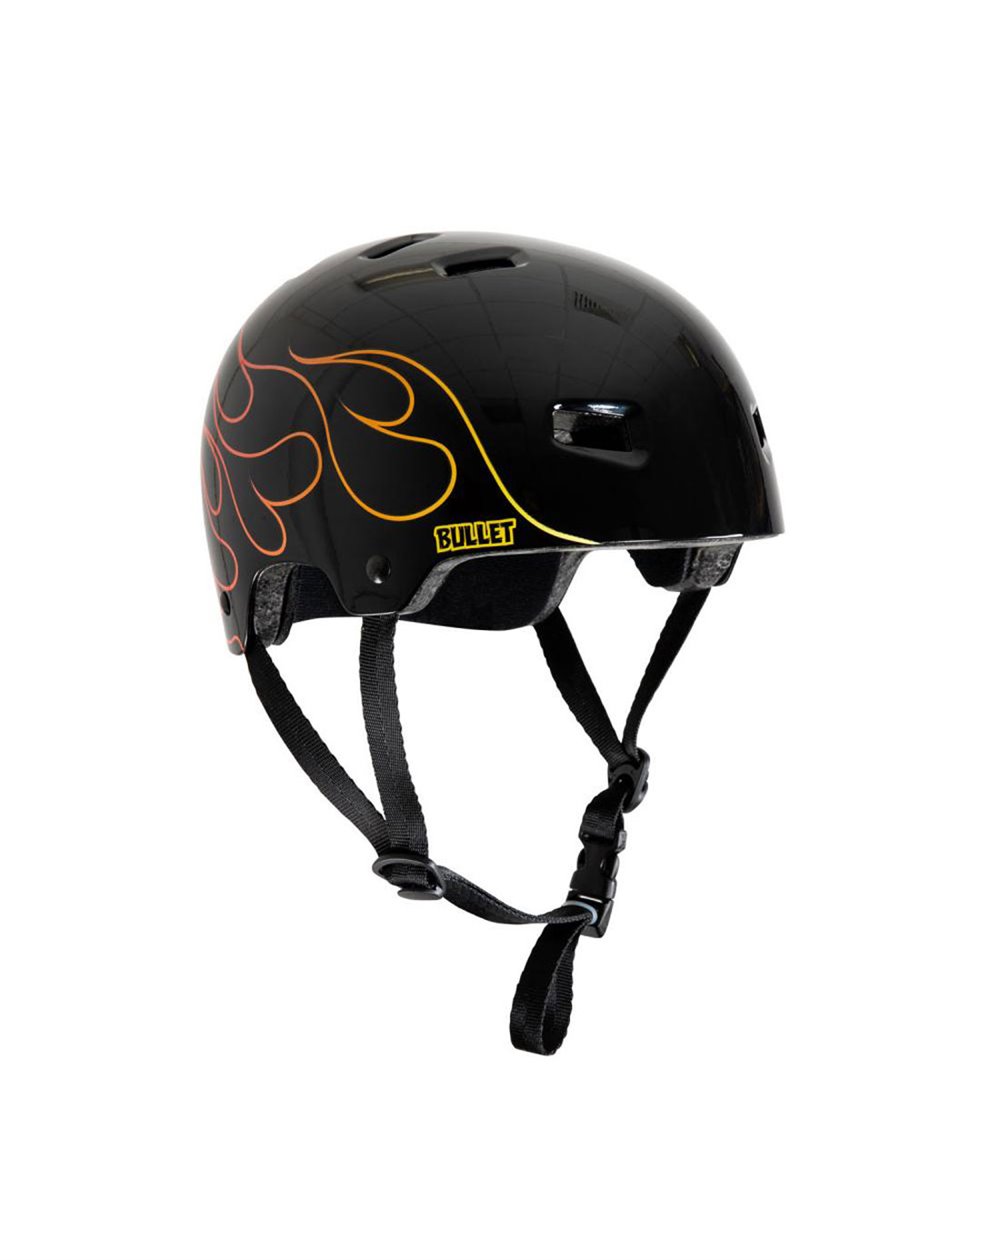 Bullet Safety Gear T35 Flame Youth Skateboard Helmet